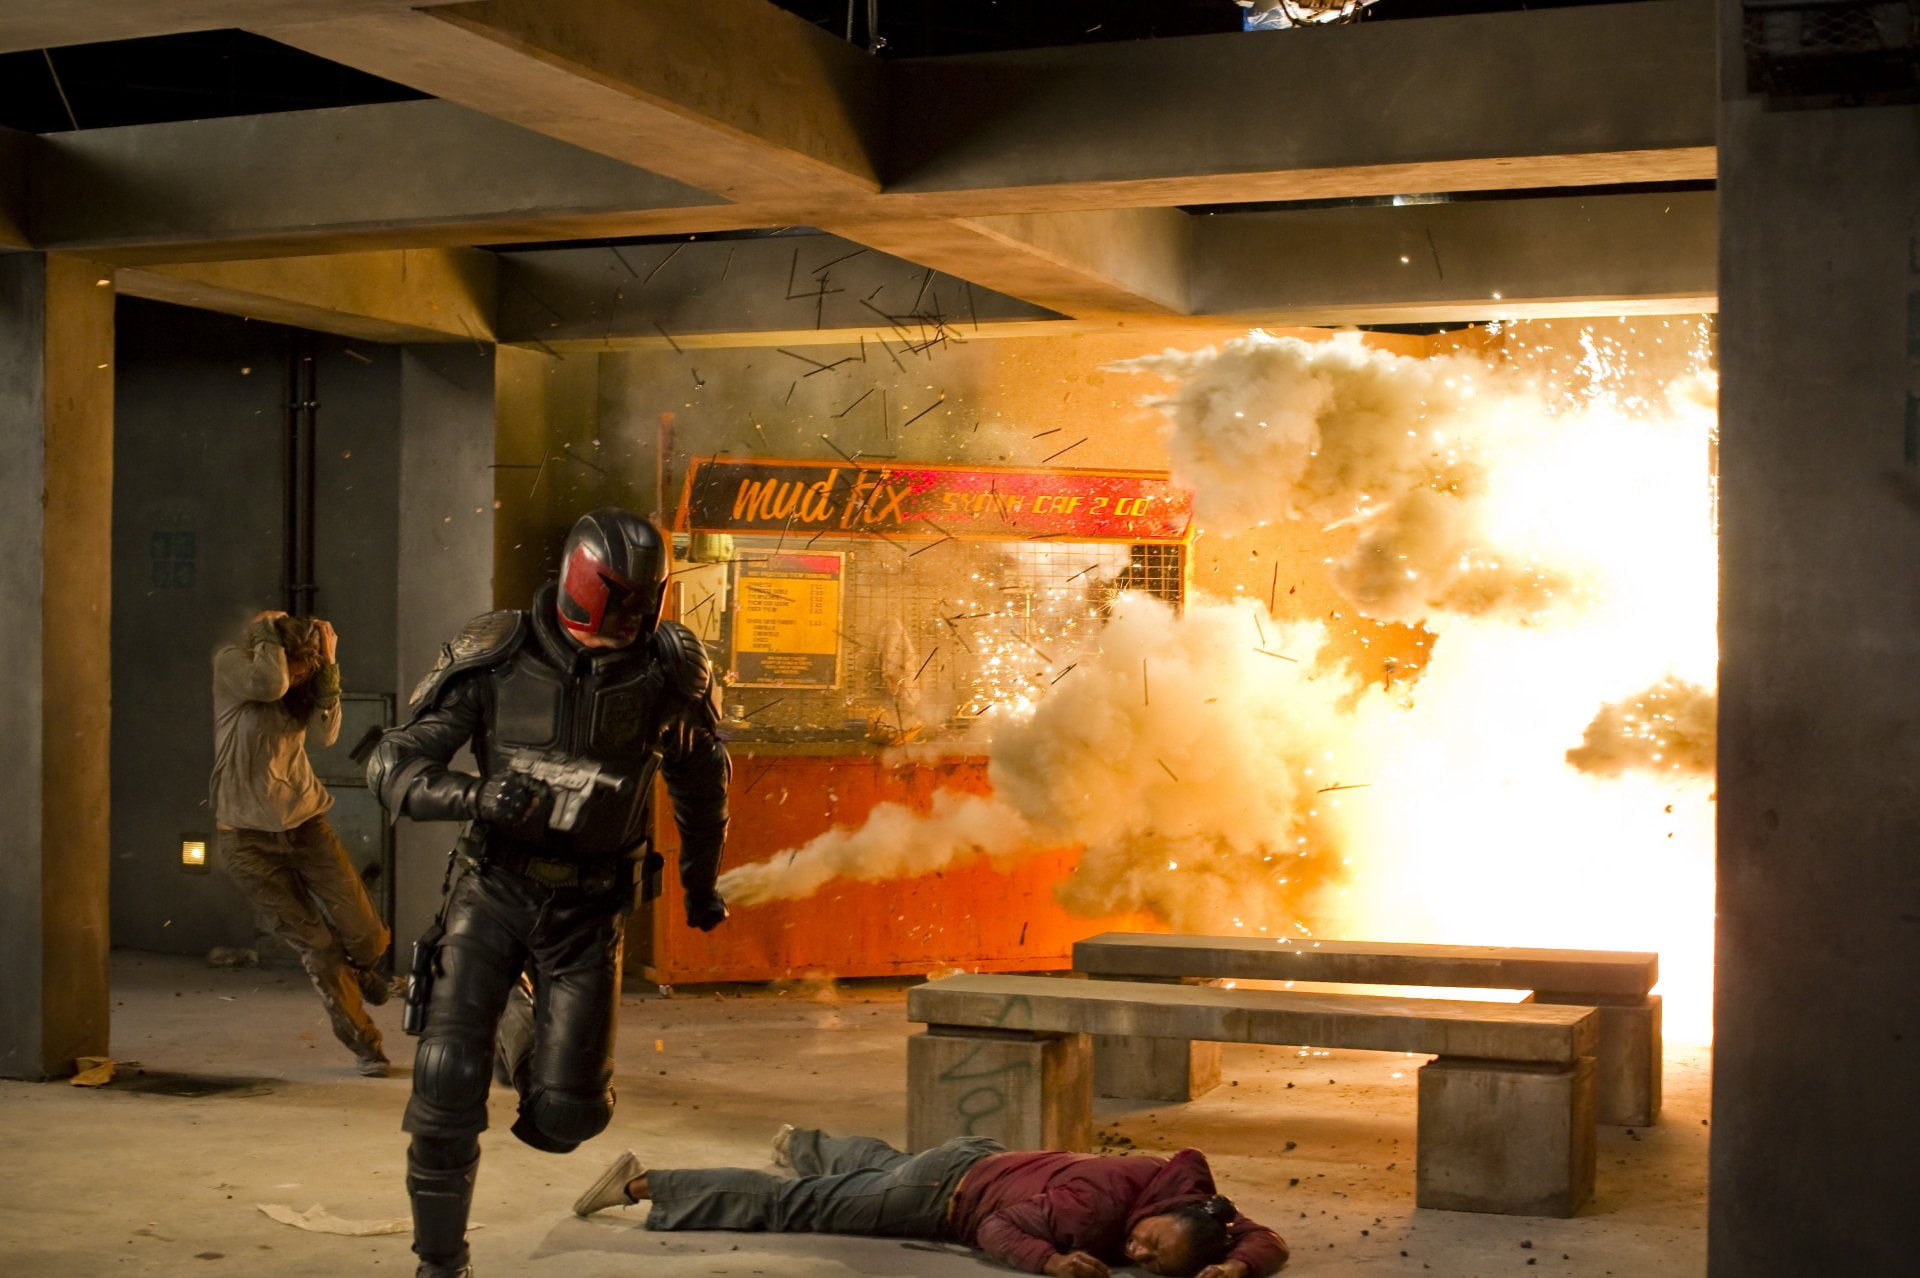 Judge Dredd, fire - natural phenomenon, occupation, firefighter